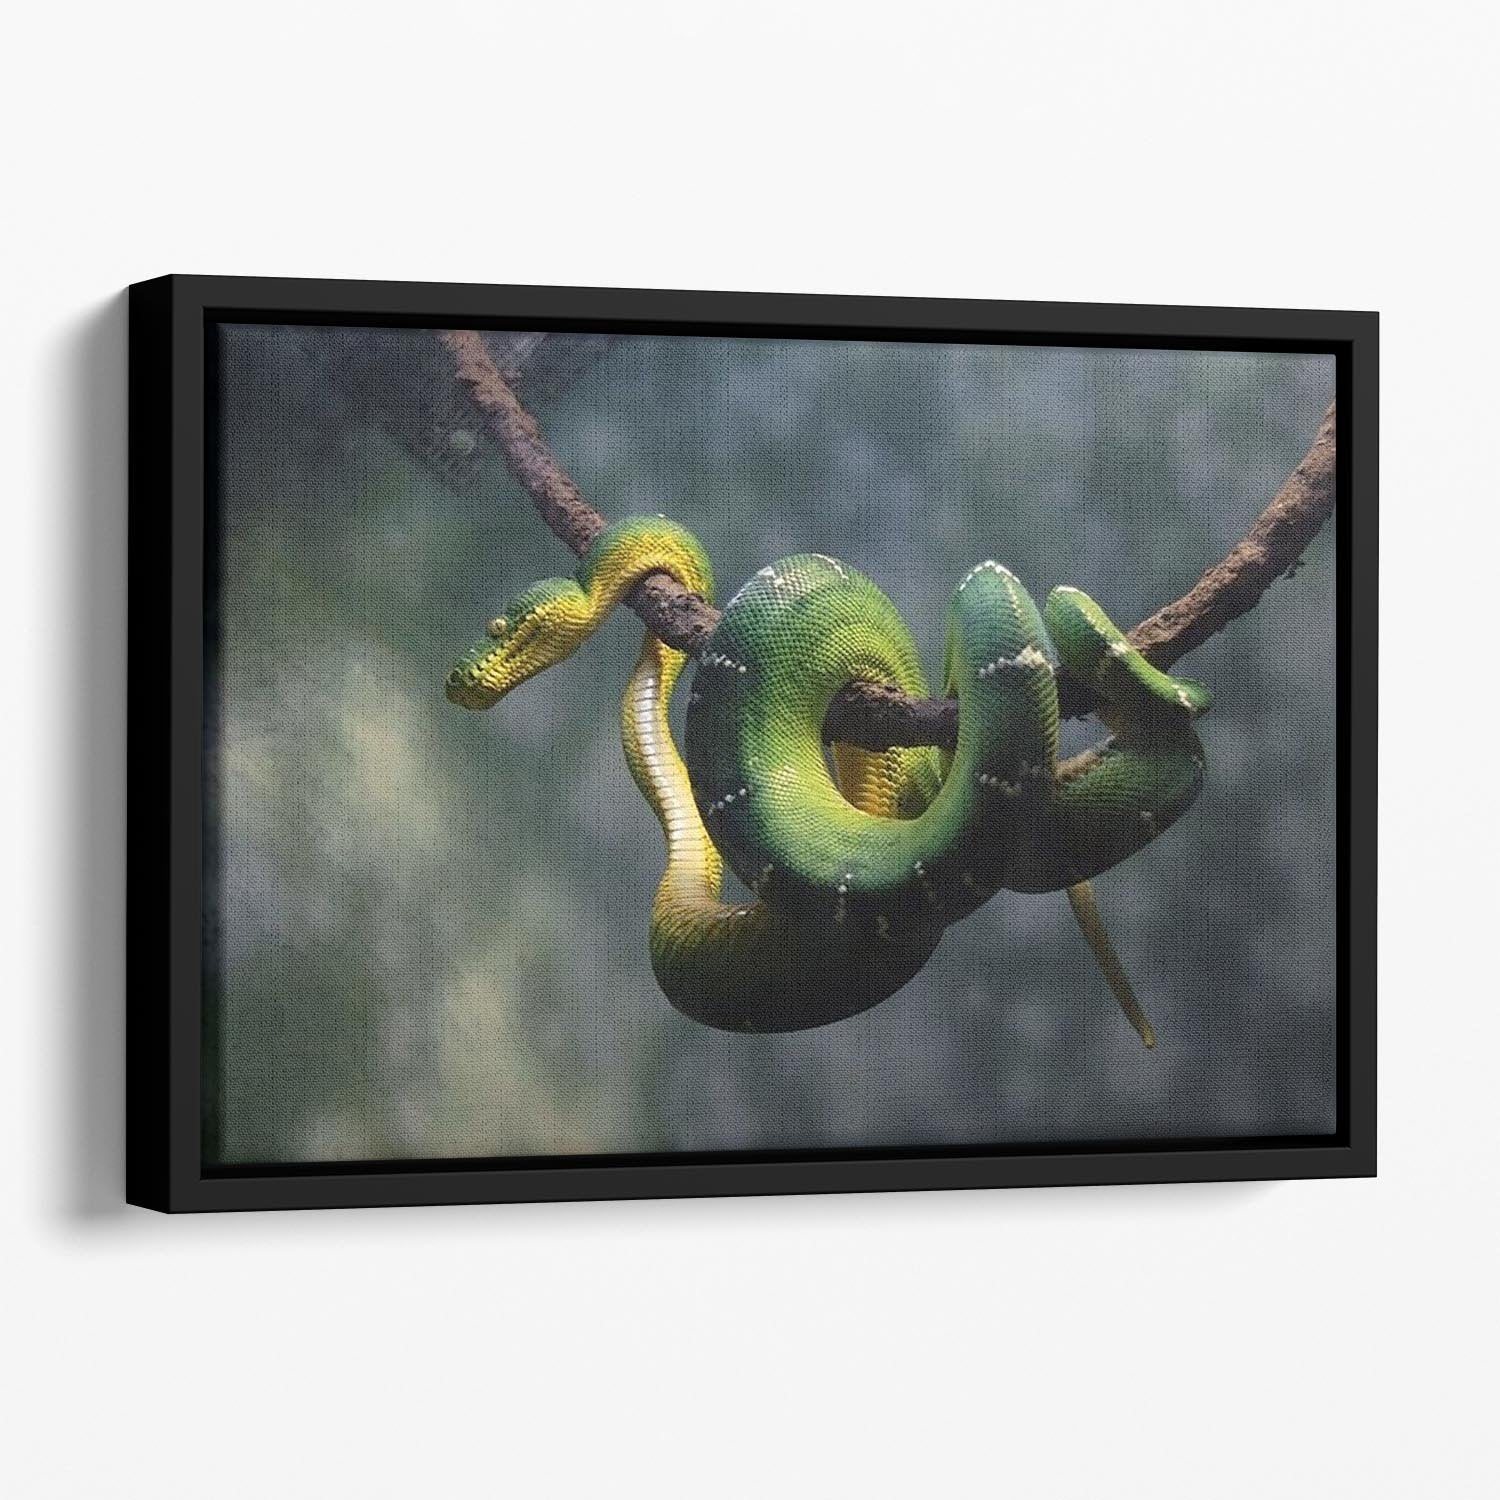 Green snake hangs on branch Floating Framed Canvas - Canvas Art Rocks - 1